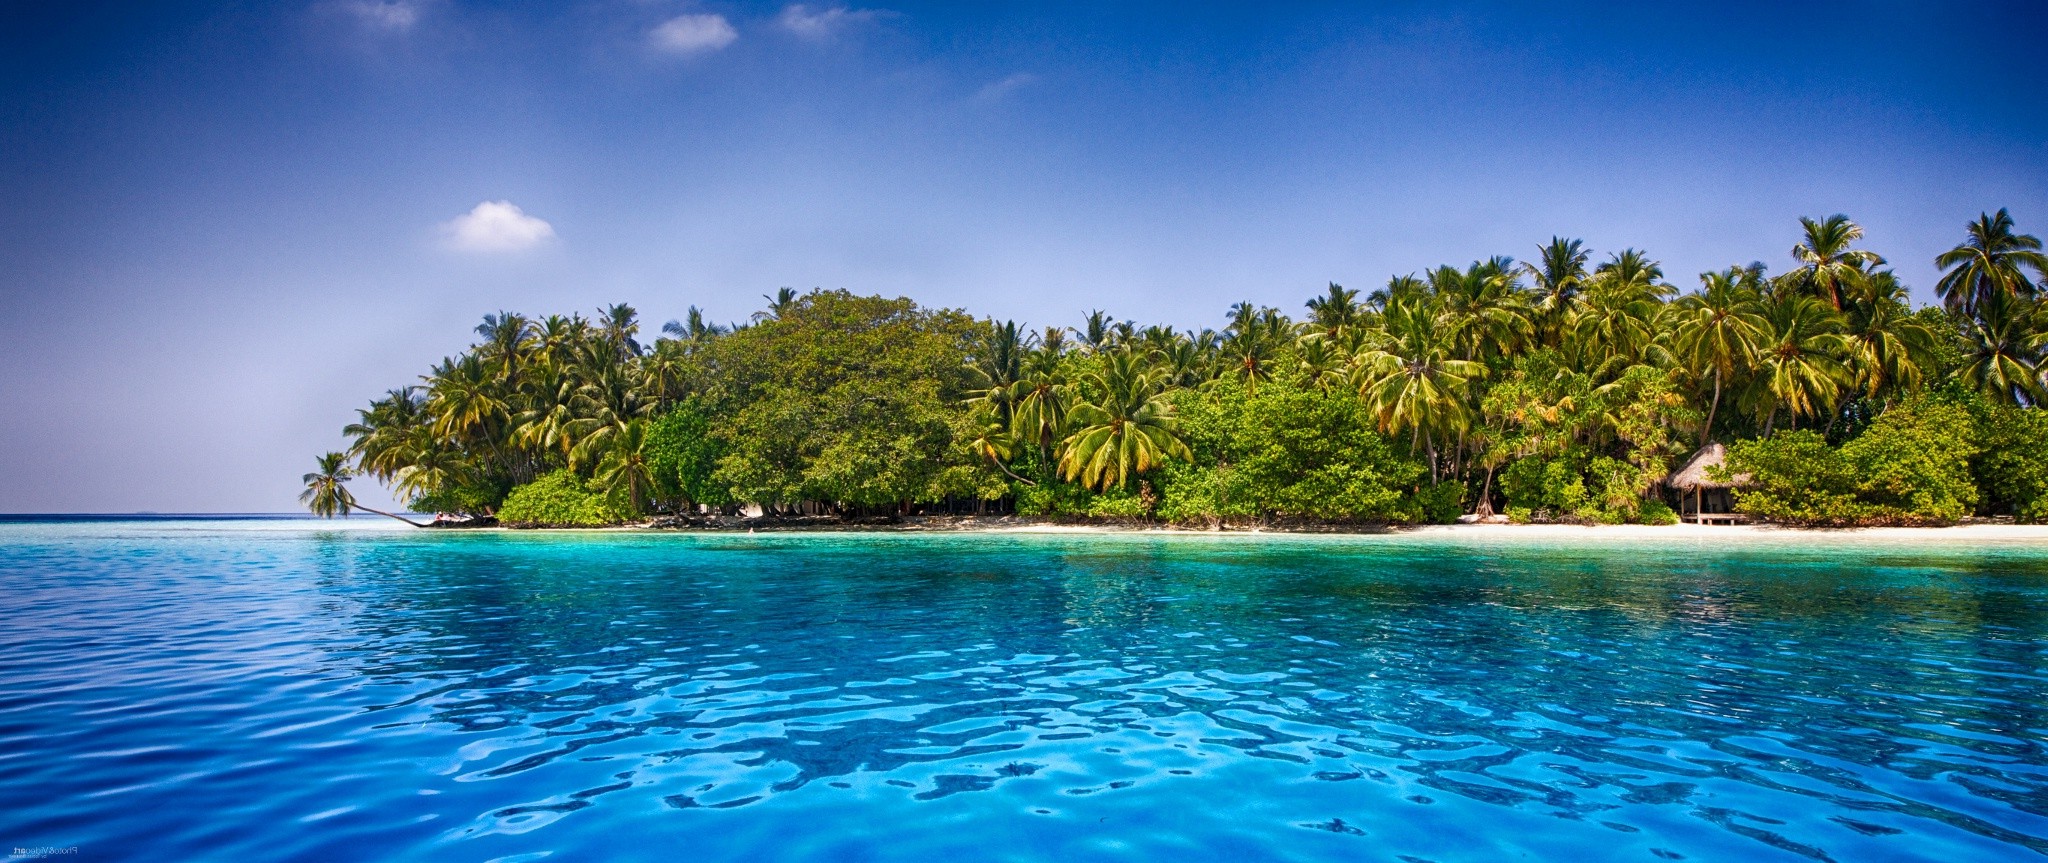 Maldives, Beach, Palm Trees, Tropical, Sea, Sand, Water, Summer, Exotic, Nature, Landscape Wallpaper